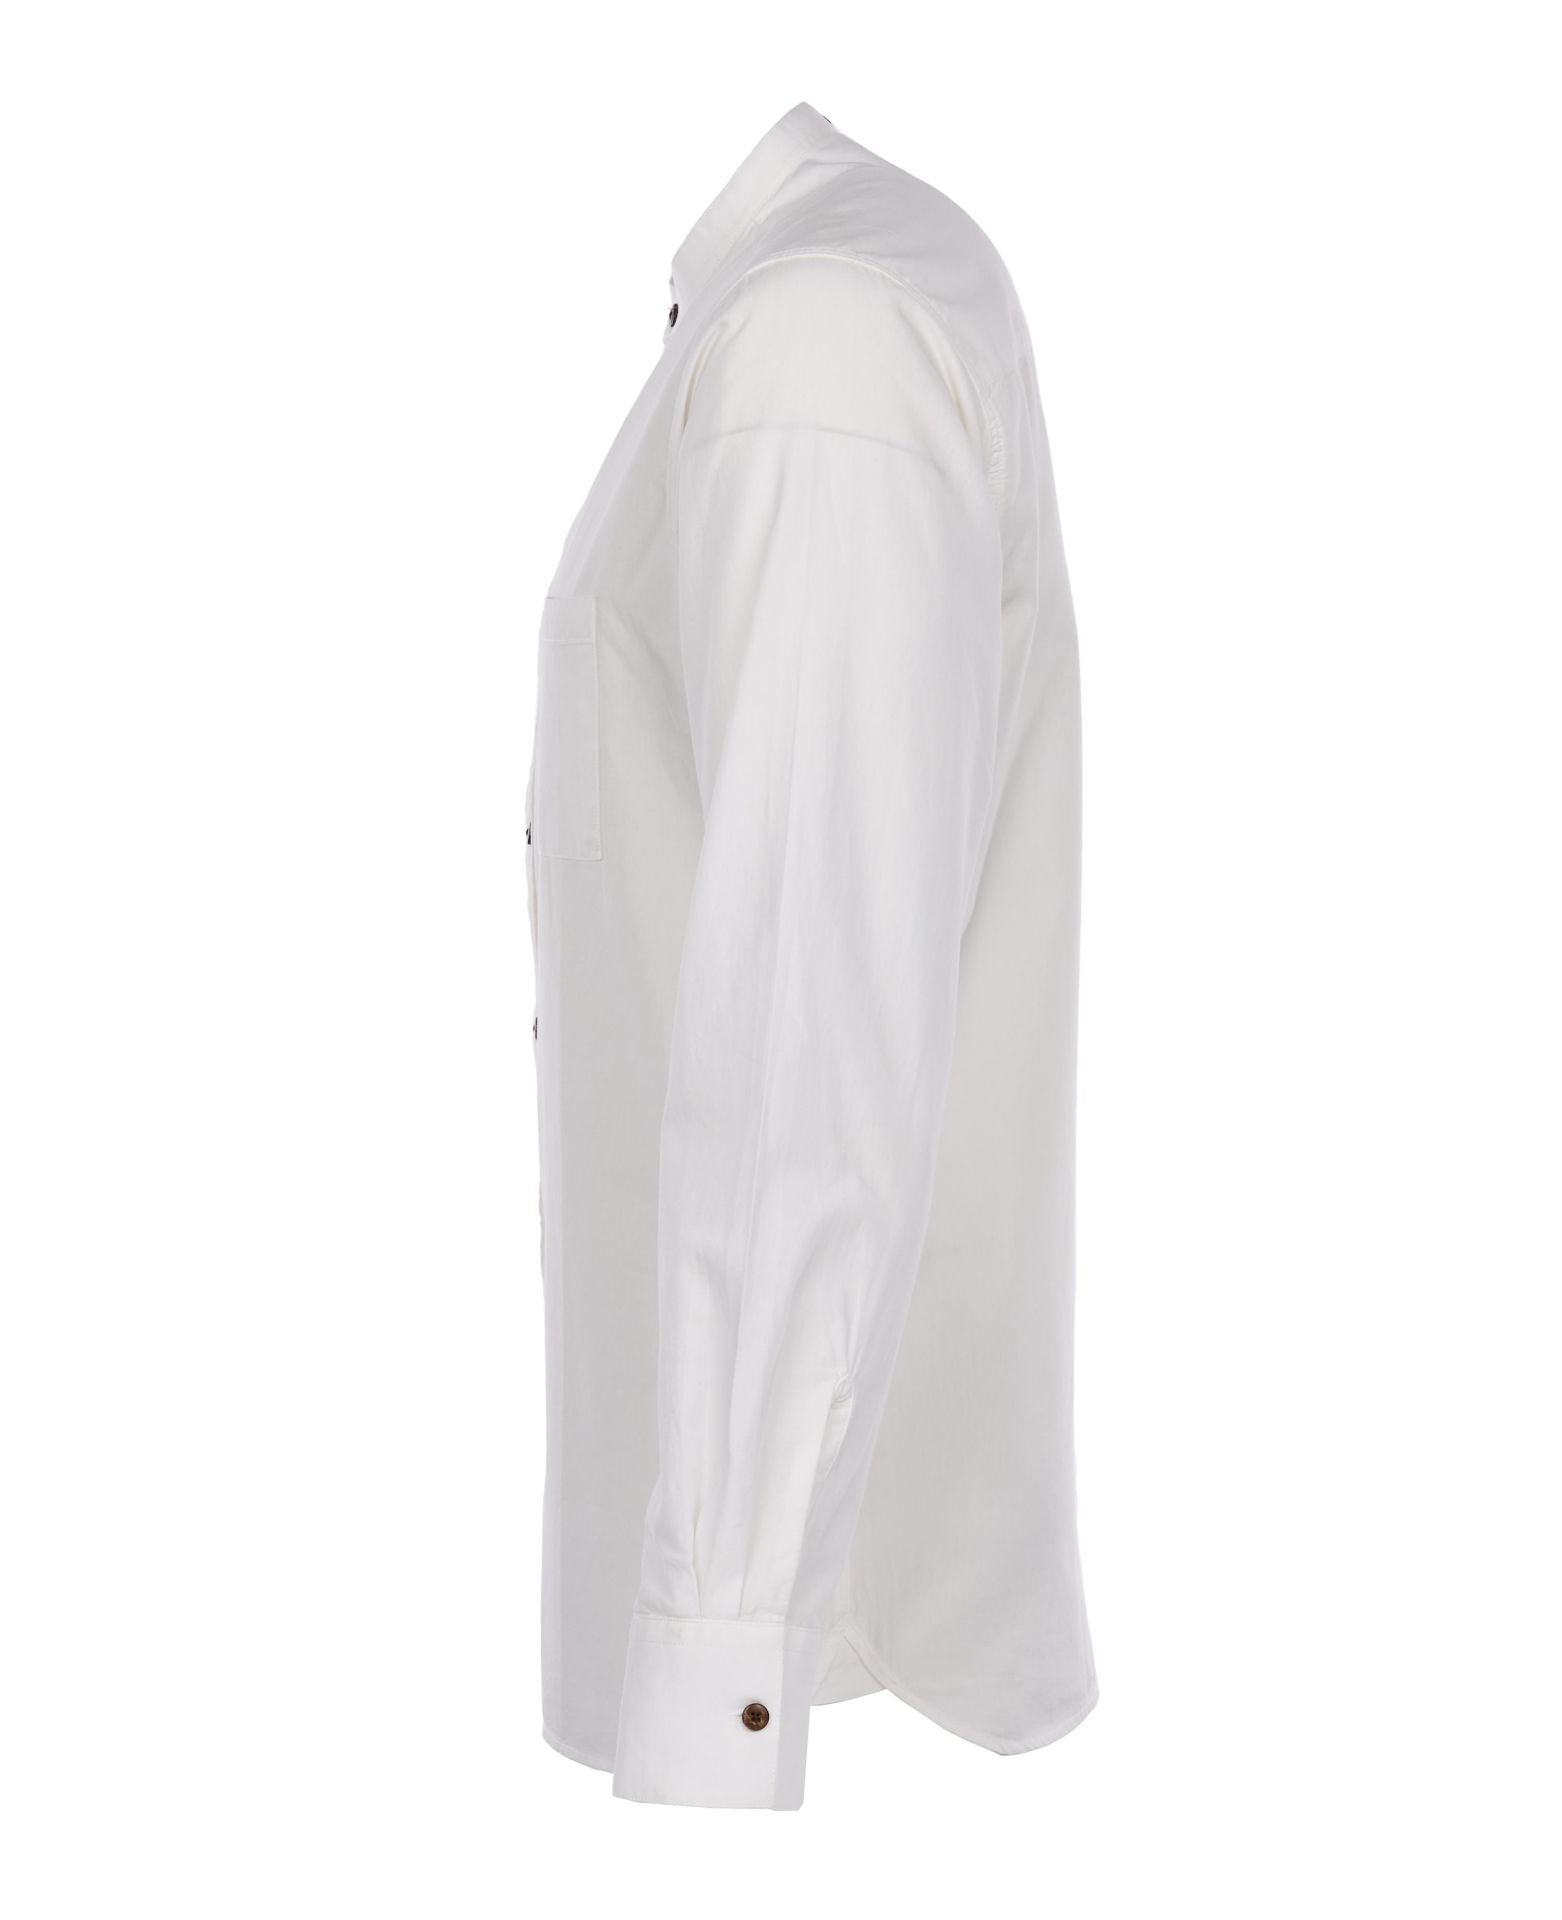 1923 Buccanoy Shirt - white chambrey